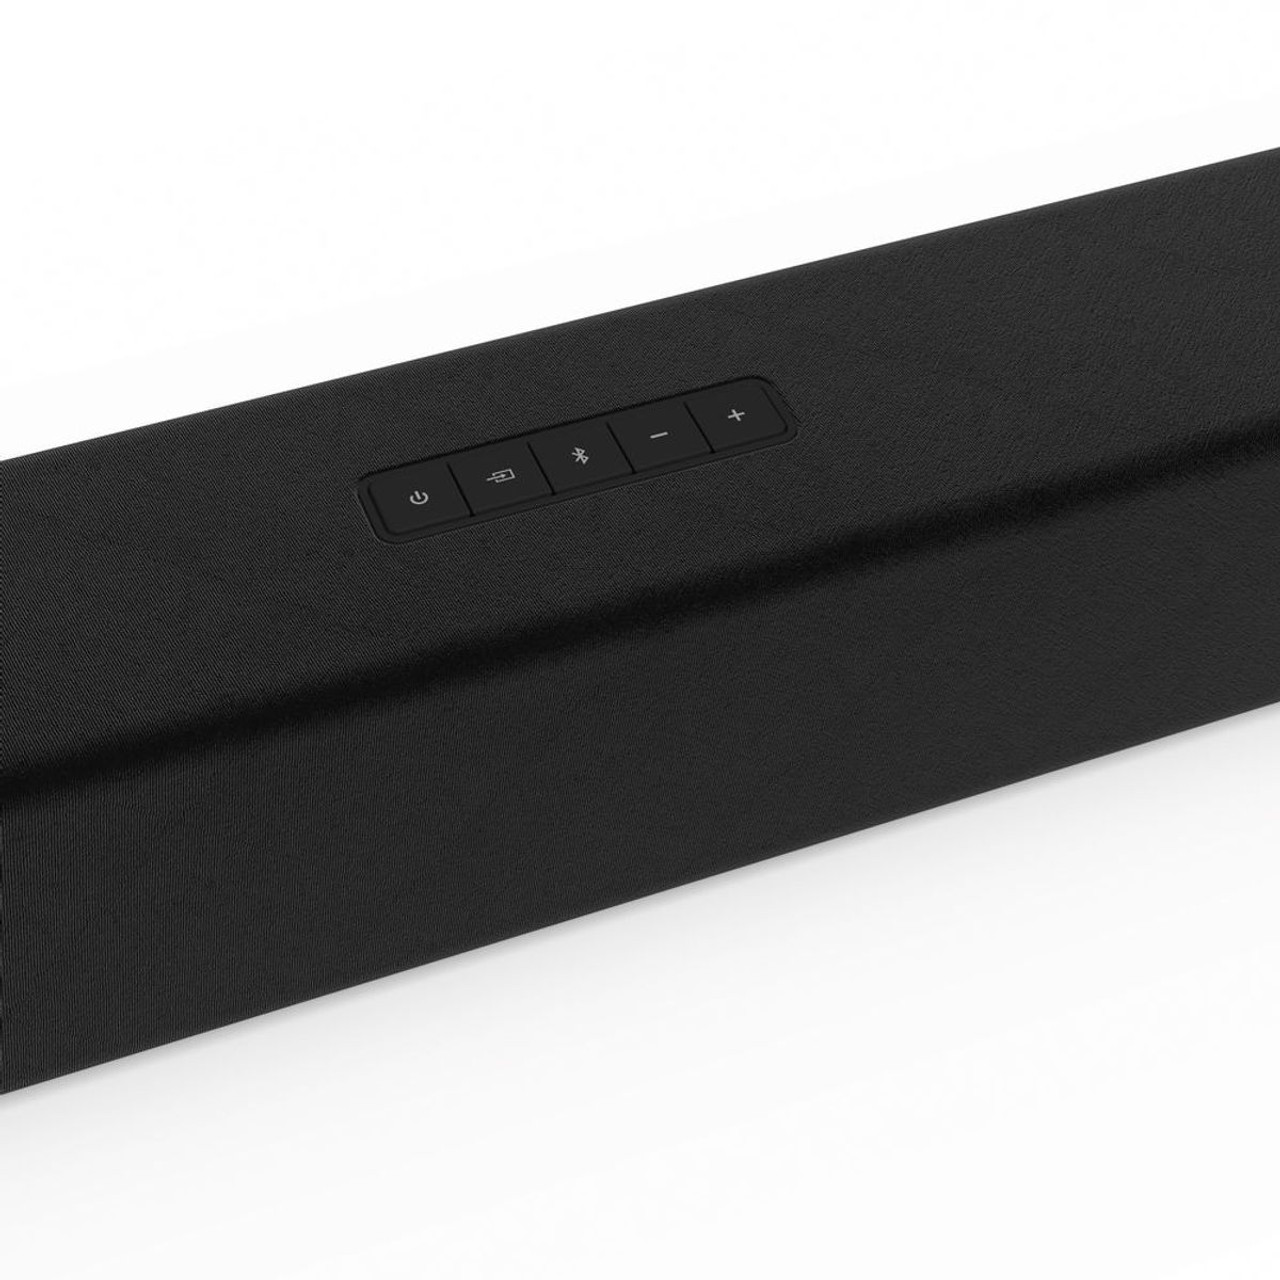 VIZIO® 38-Inch 2.1 Sound Bar Speaker System product image